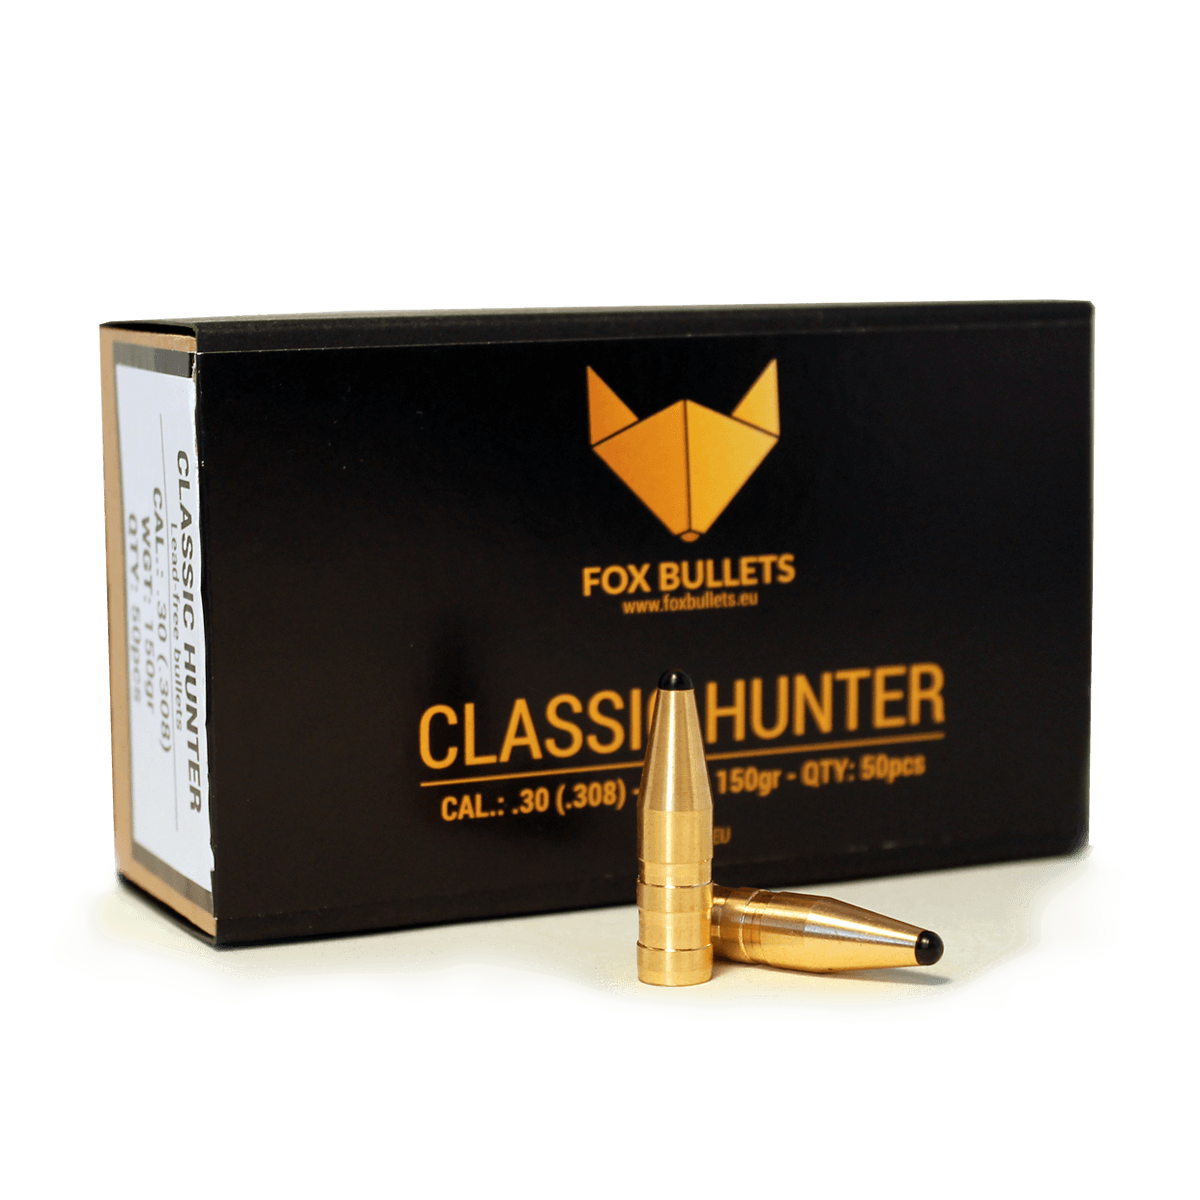 Fox Bullets Classic Hunter Geschosse - 5,6 mm